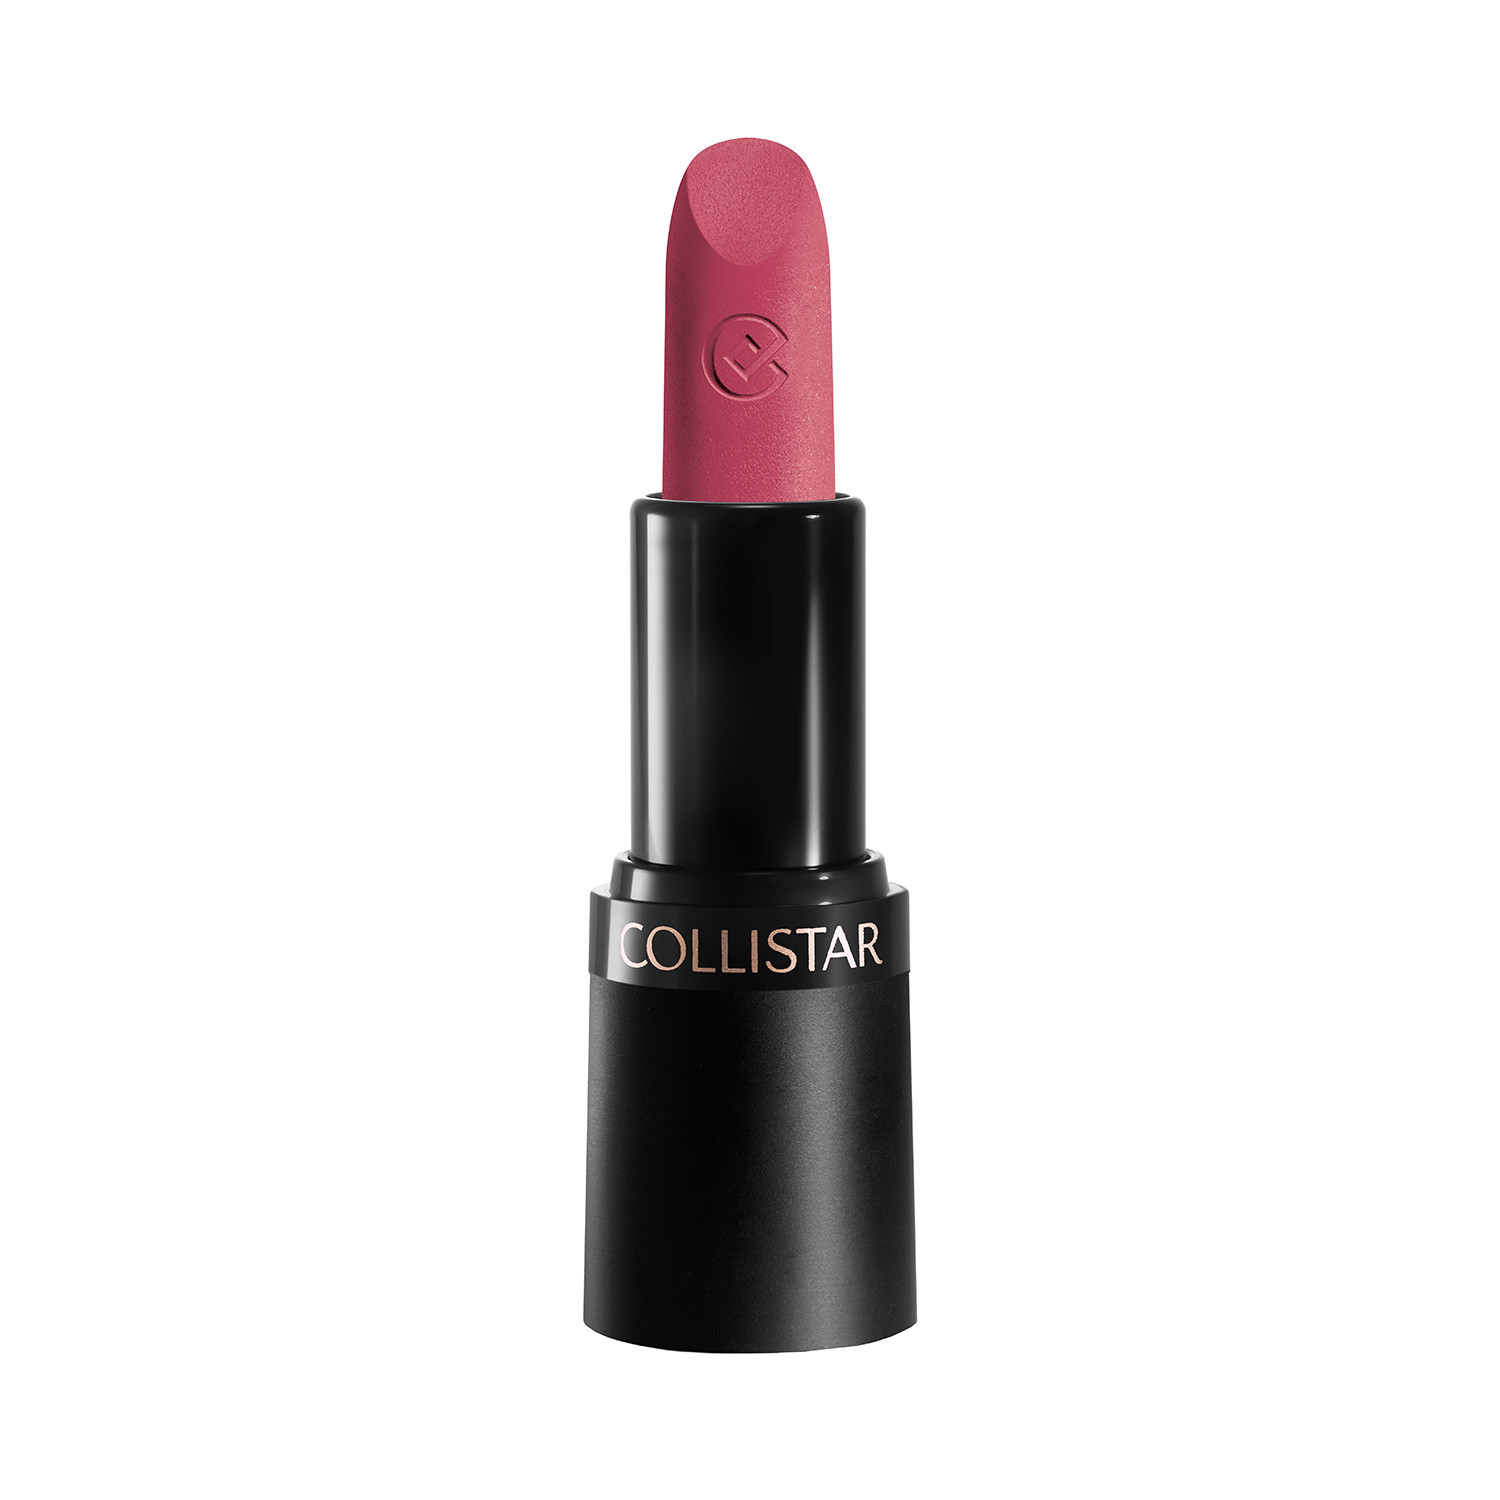 Collistar - Pure matte lipstick - 113 Autumn Berry, Pink Flamingo, large image number 0